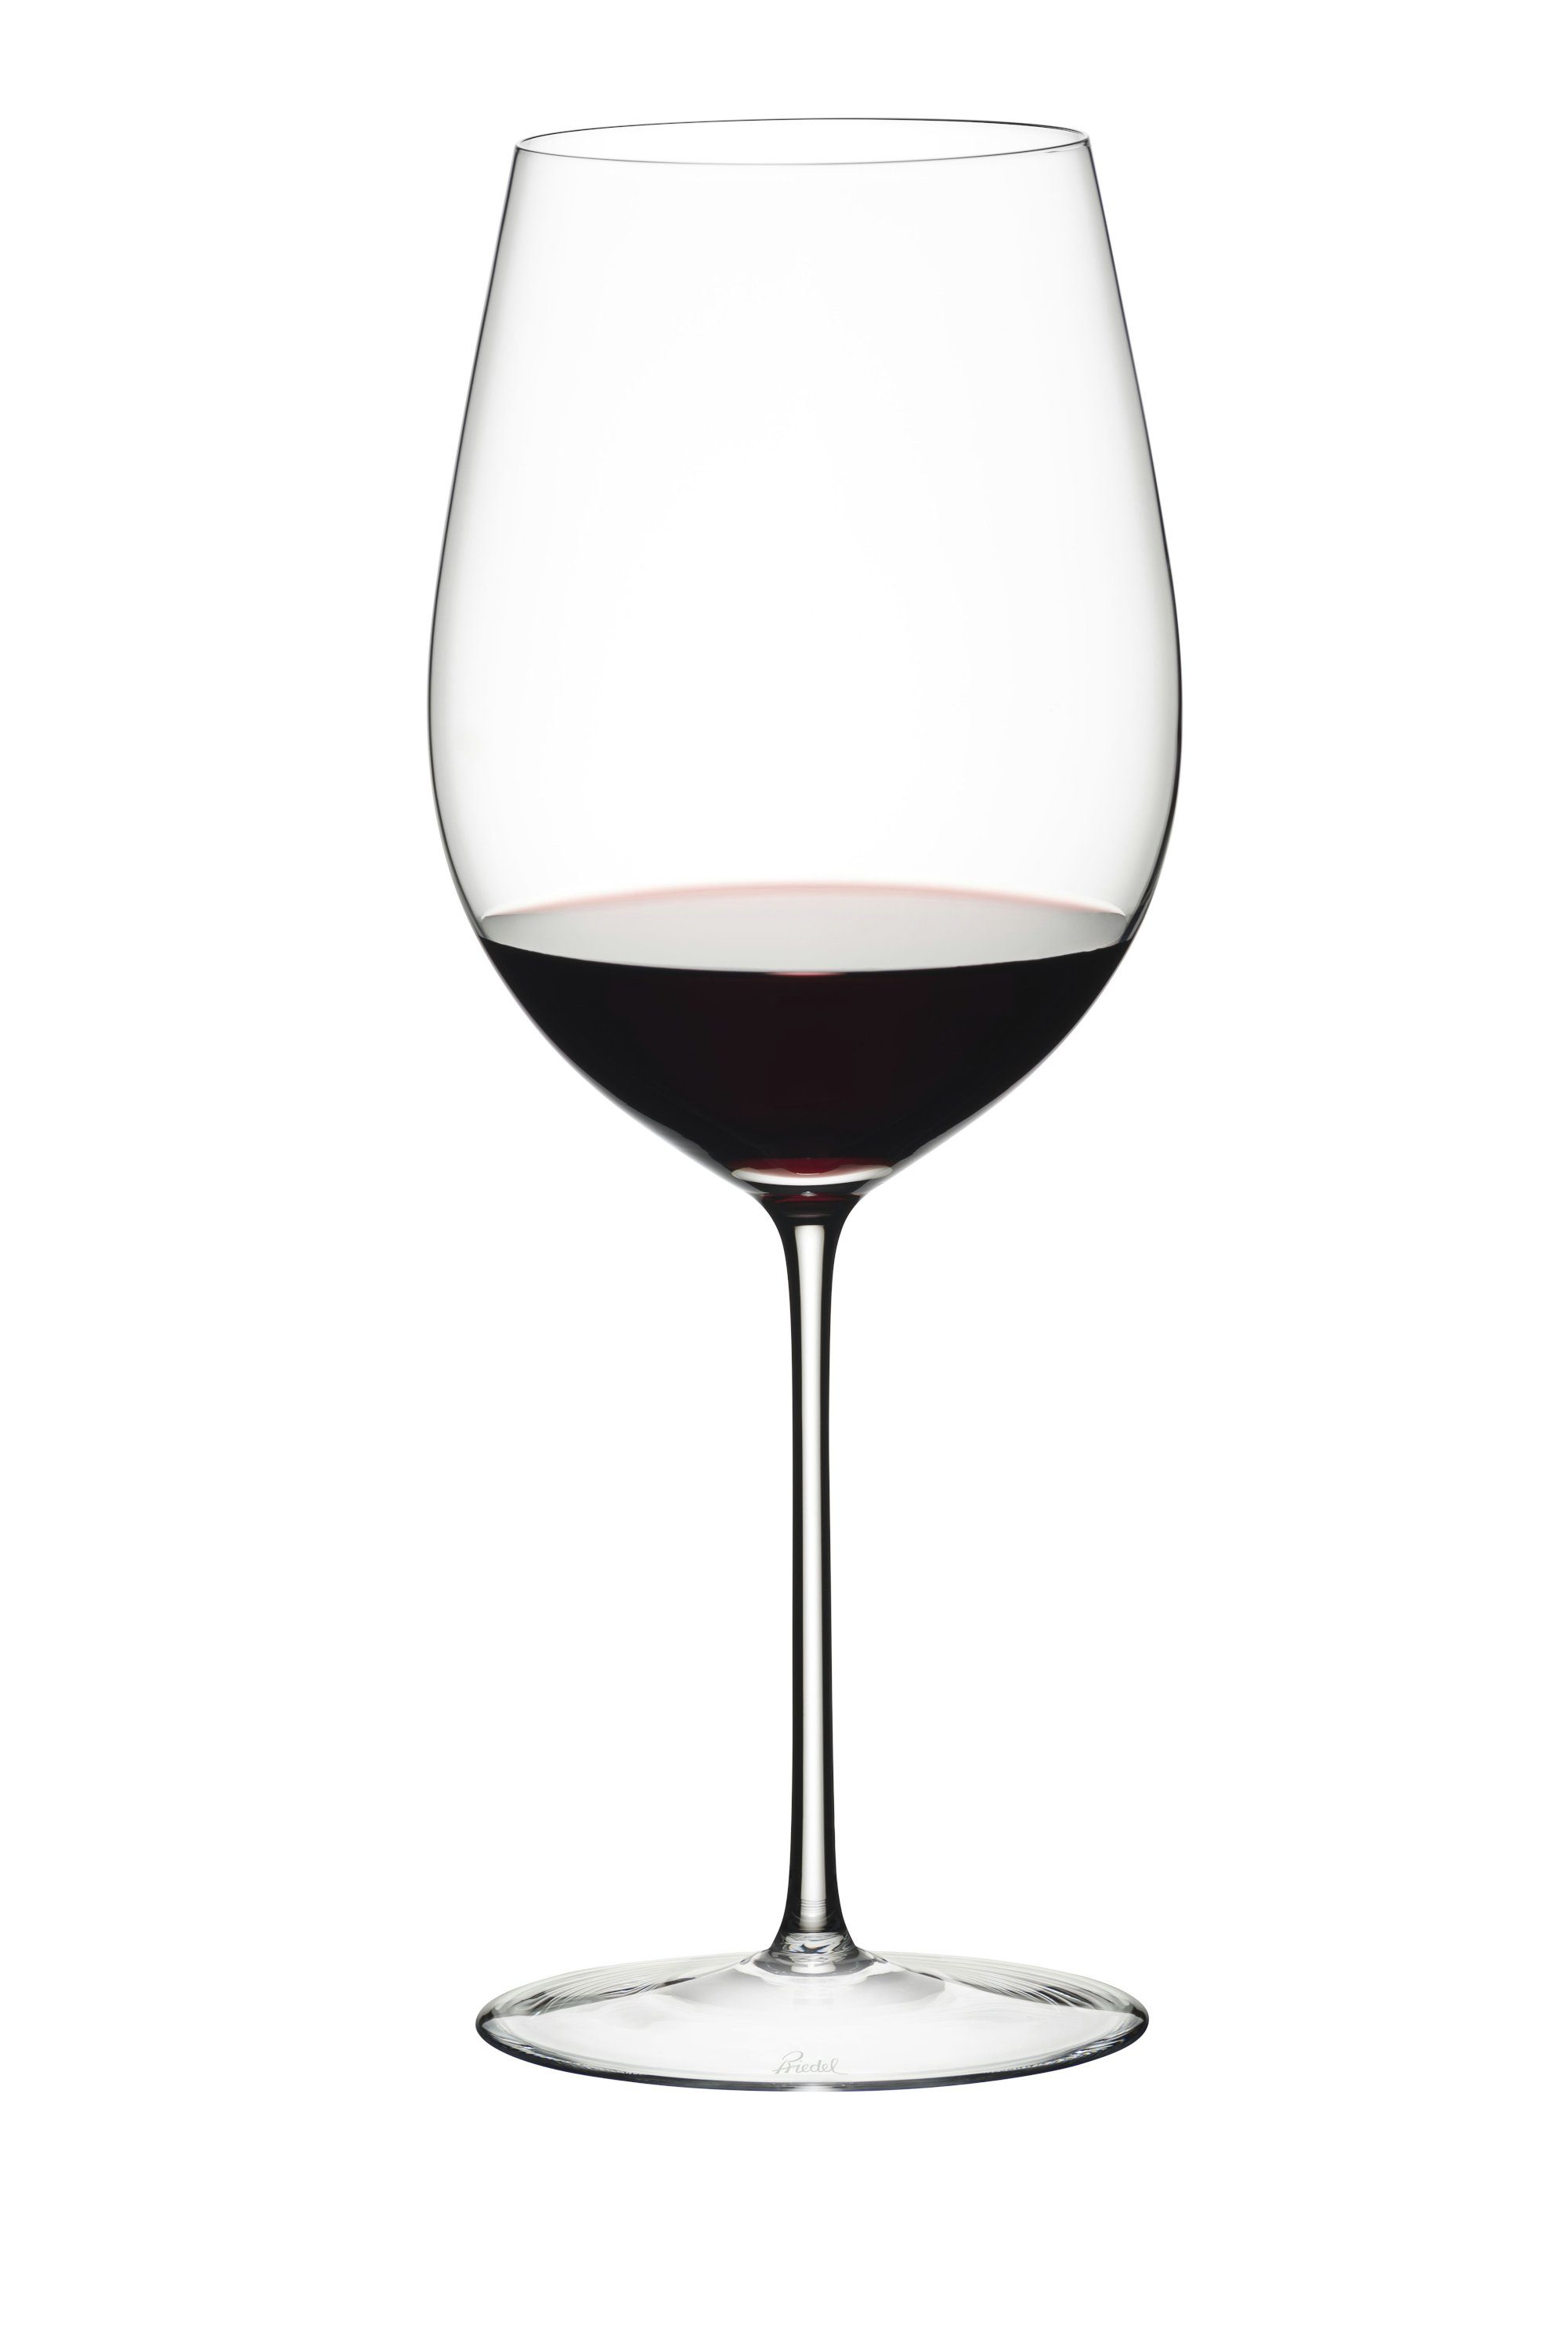 RIEDEL Cru, Grand Rotweinglas Sommeliers Bordeaux Glas Glas Riedel